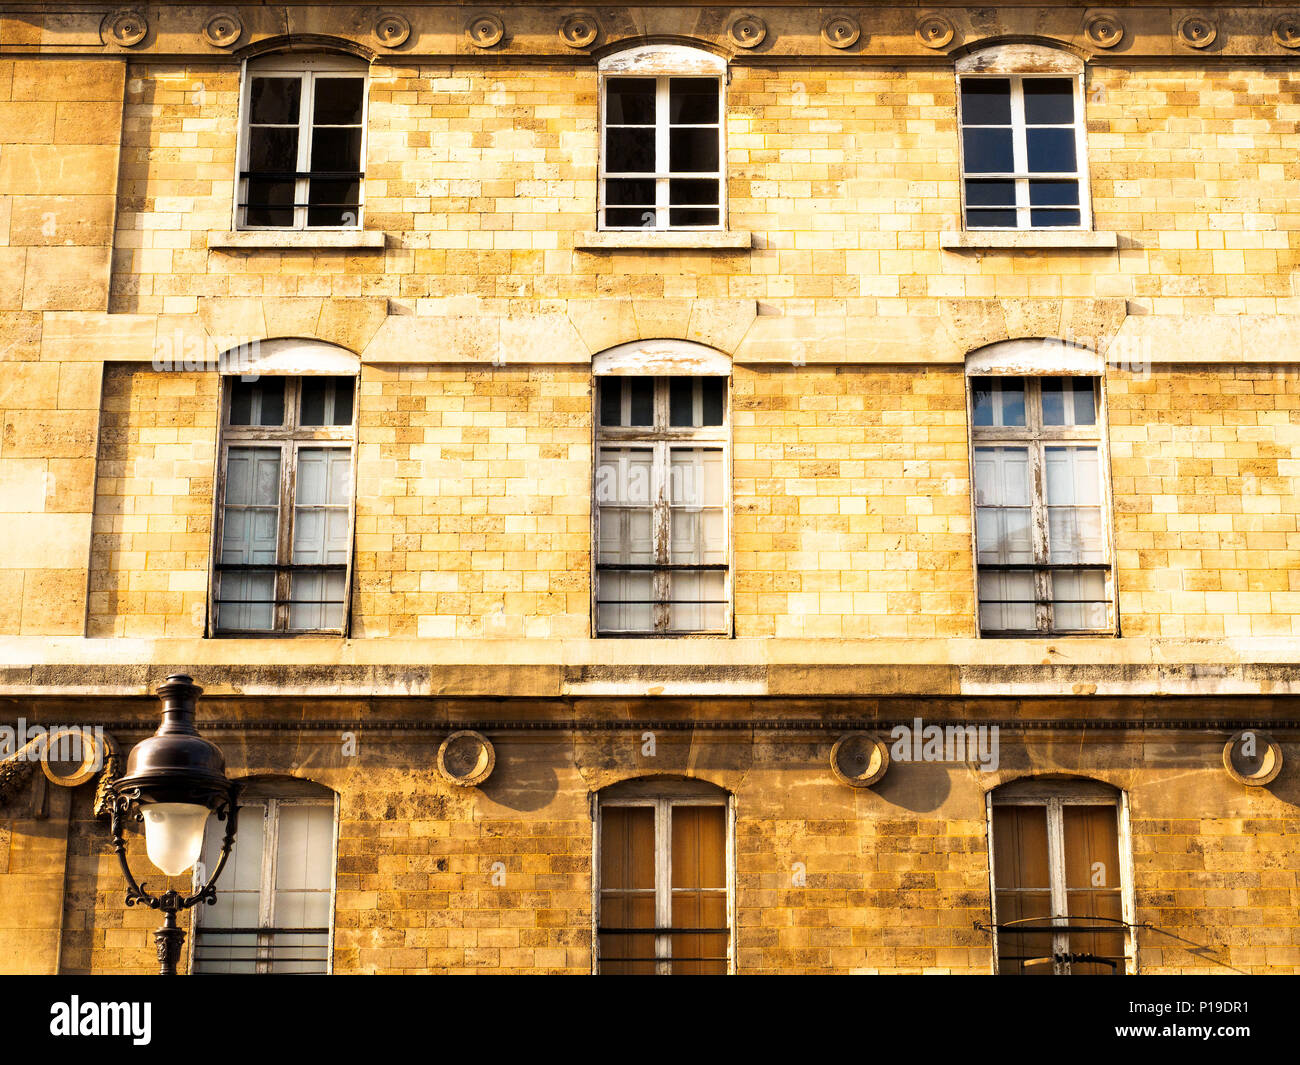 Jacques Doucet Literary Library facade - Paris, France Stock Photo